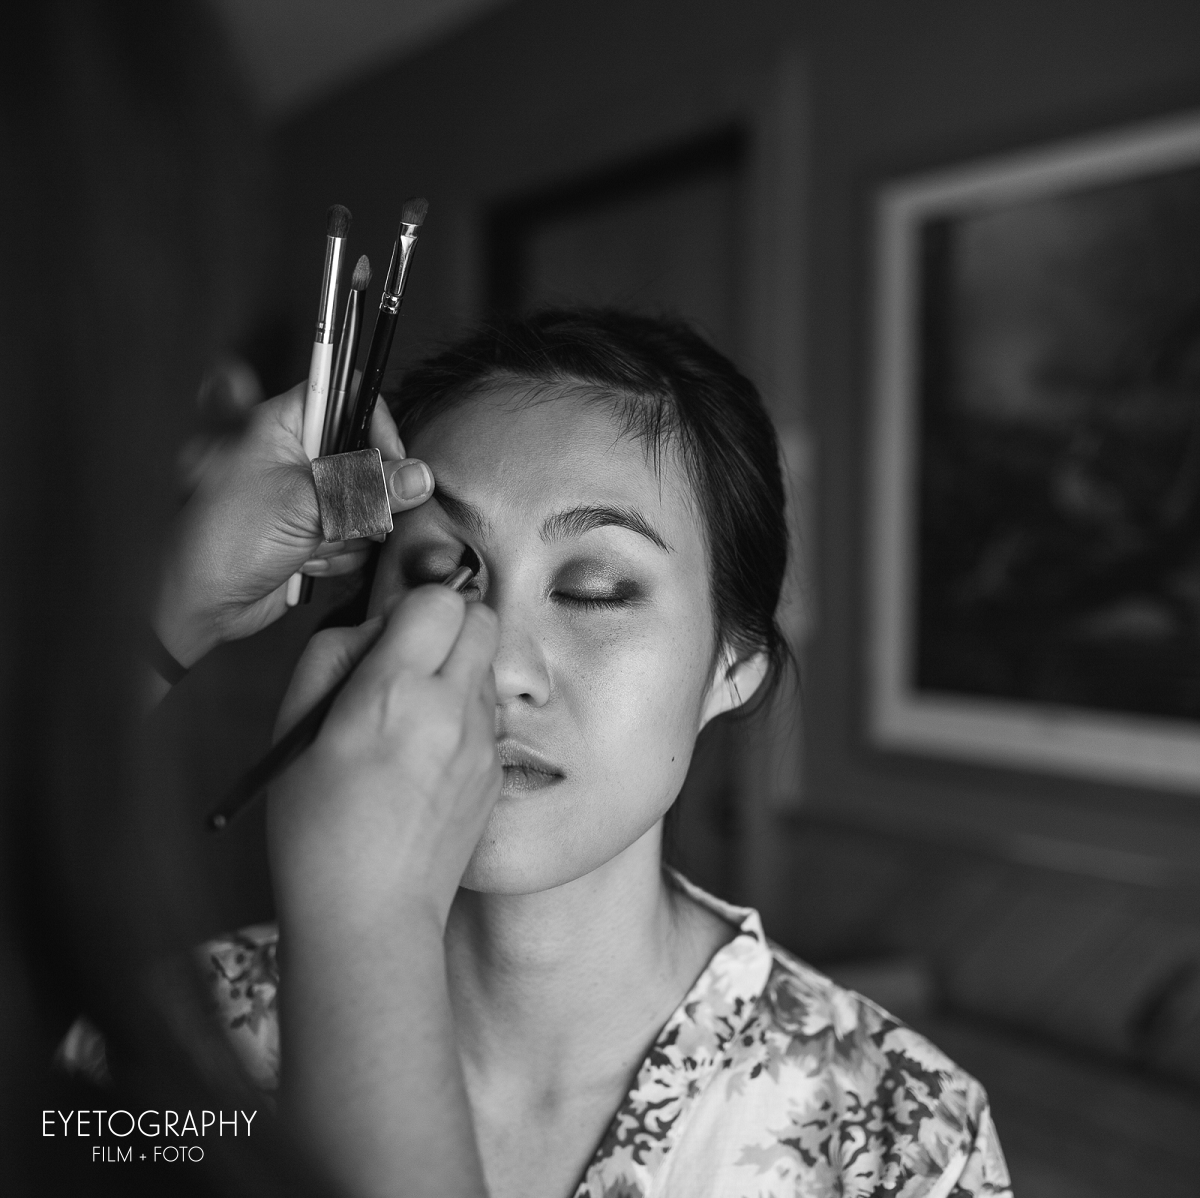 Eko Backen Wedding Photography - Eyetography Film + Foto  3